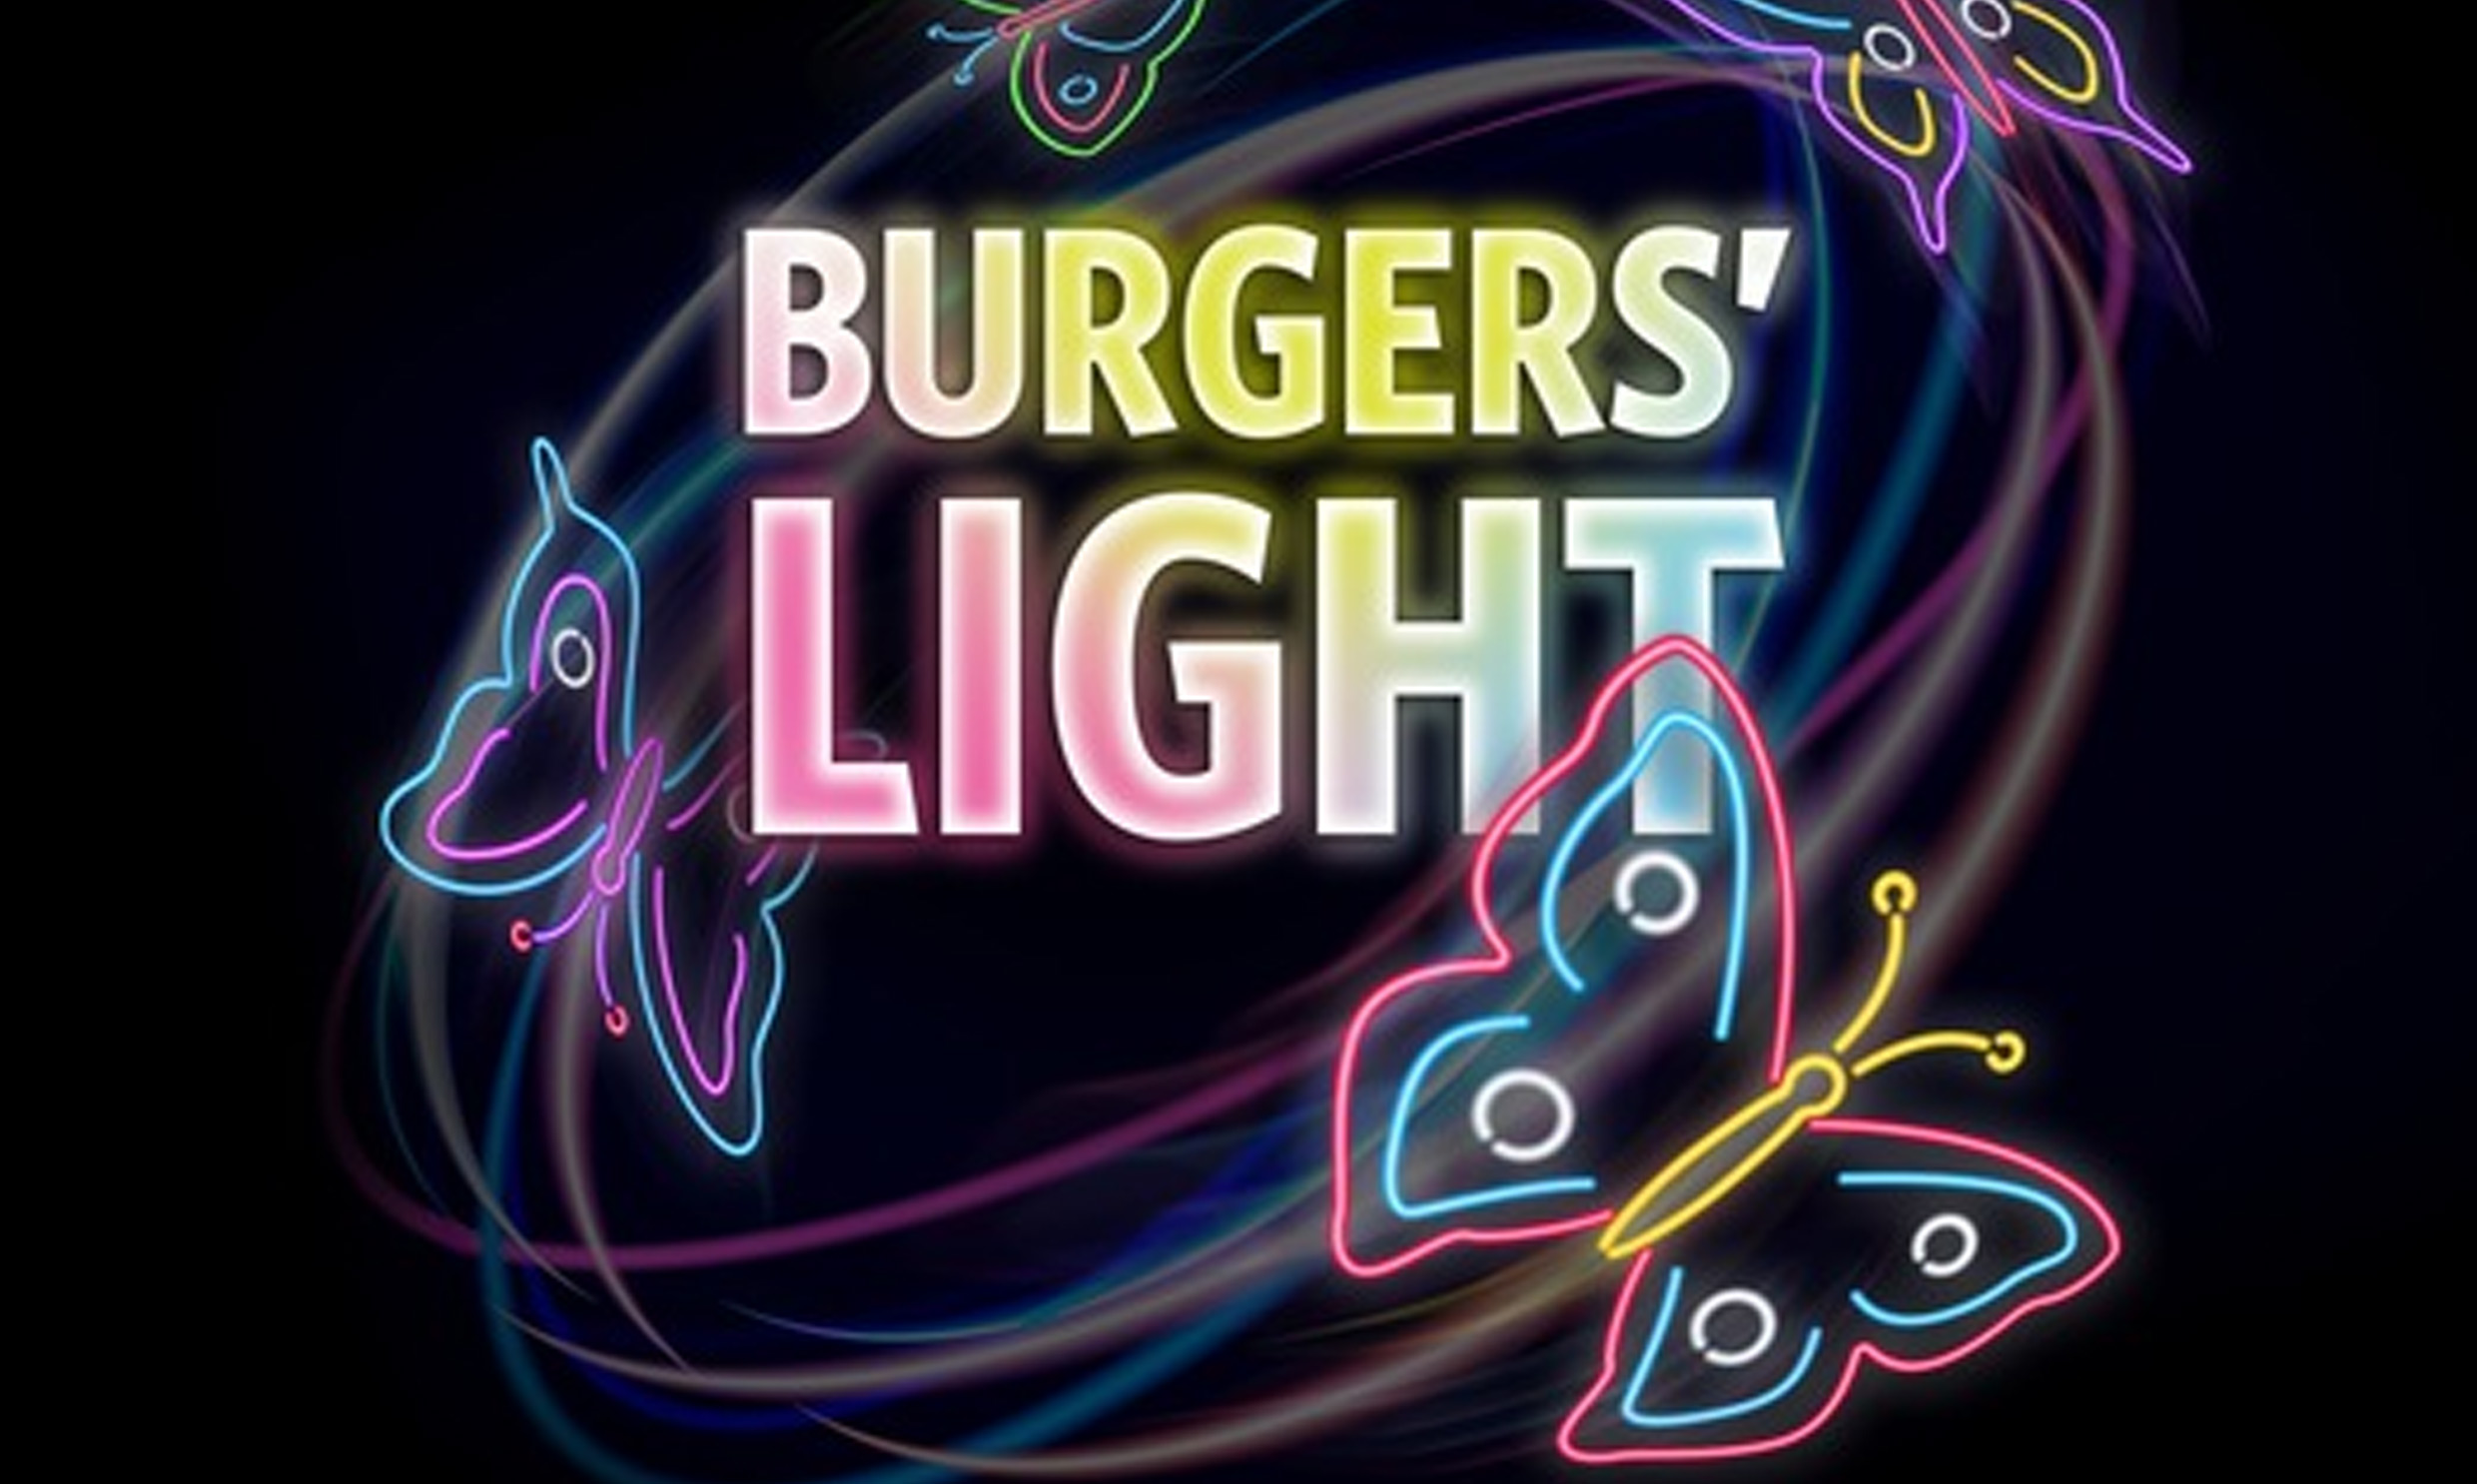 Burgers' LIght 2019 Schmetterlinge